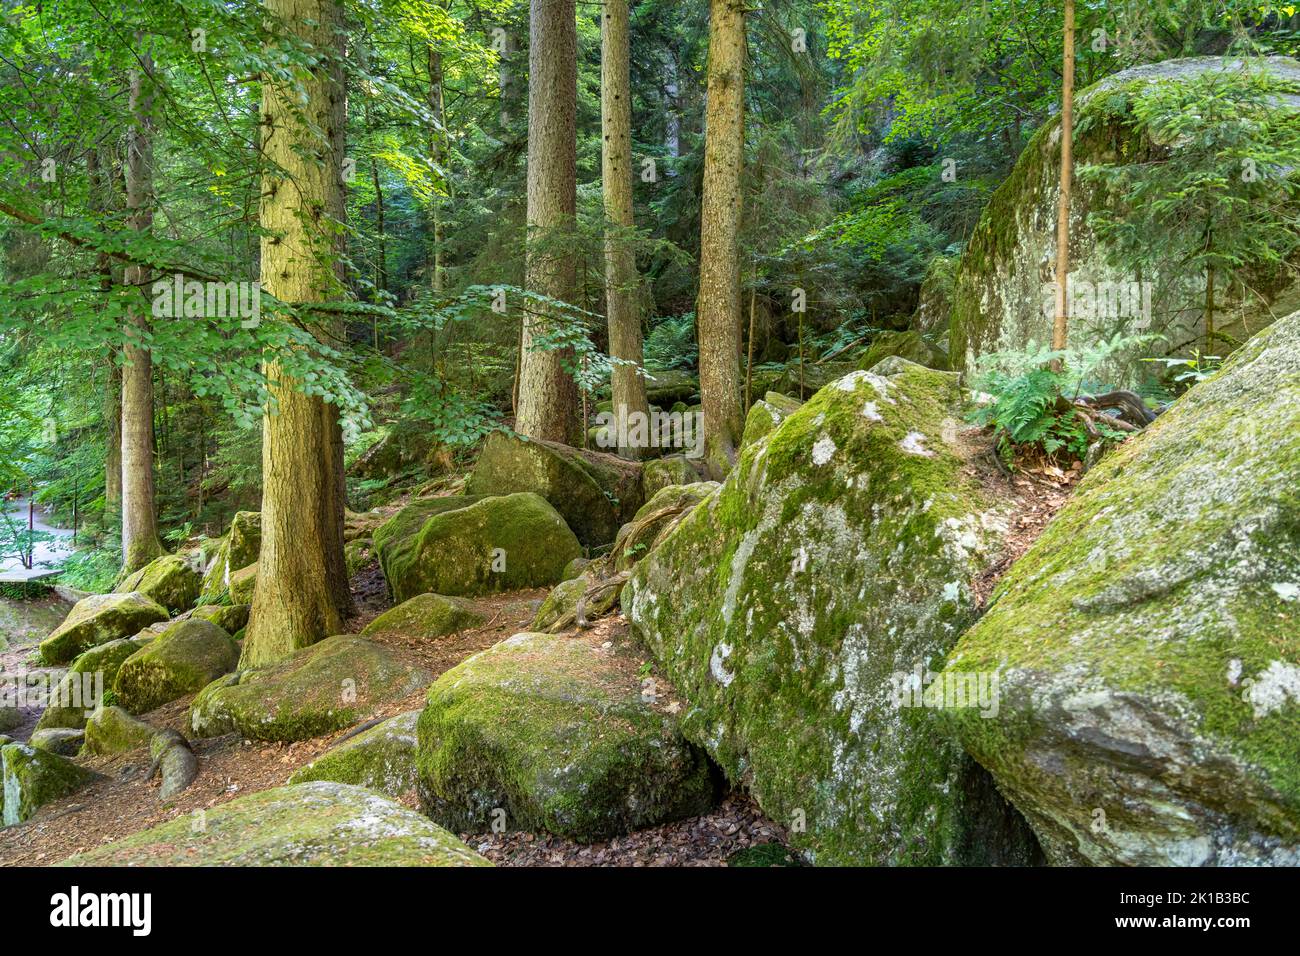 Der Wald BEI Triberg im Schwarzwald, Bade-Wurtemberg, Allemagne | la forêt de Triberg im Schwarzwald, Forêt Noire, Bade-Wurtemberg, Allemagne Banque D'Images